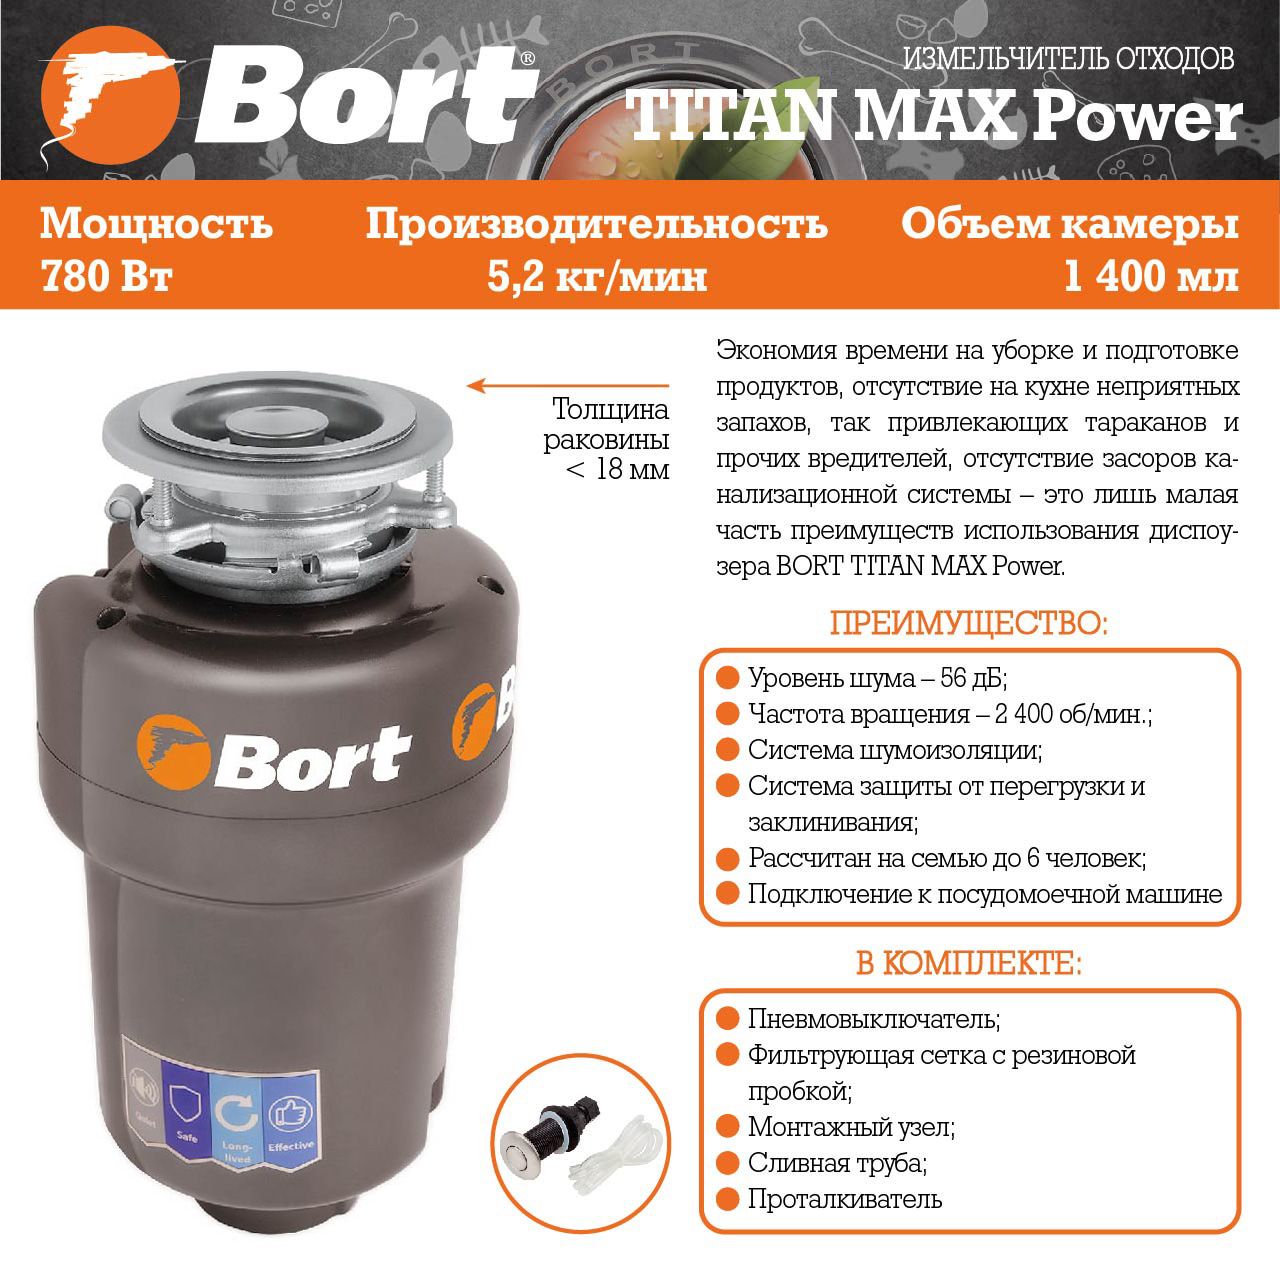 Bort Titan Max Power